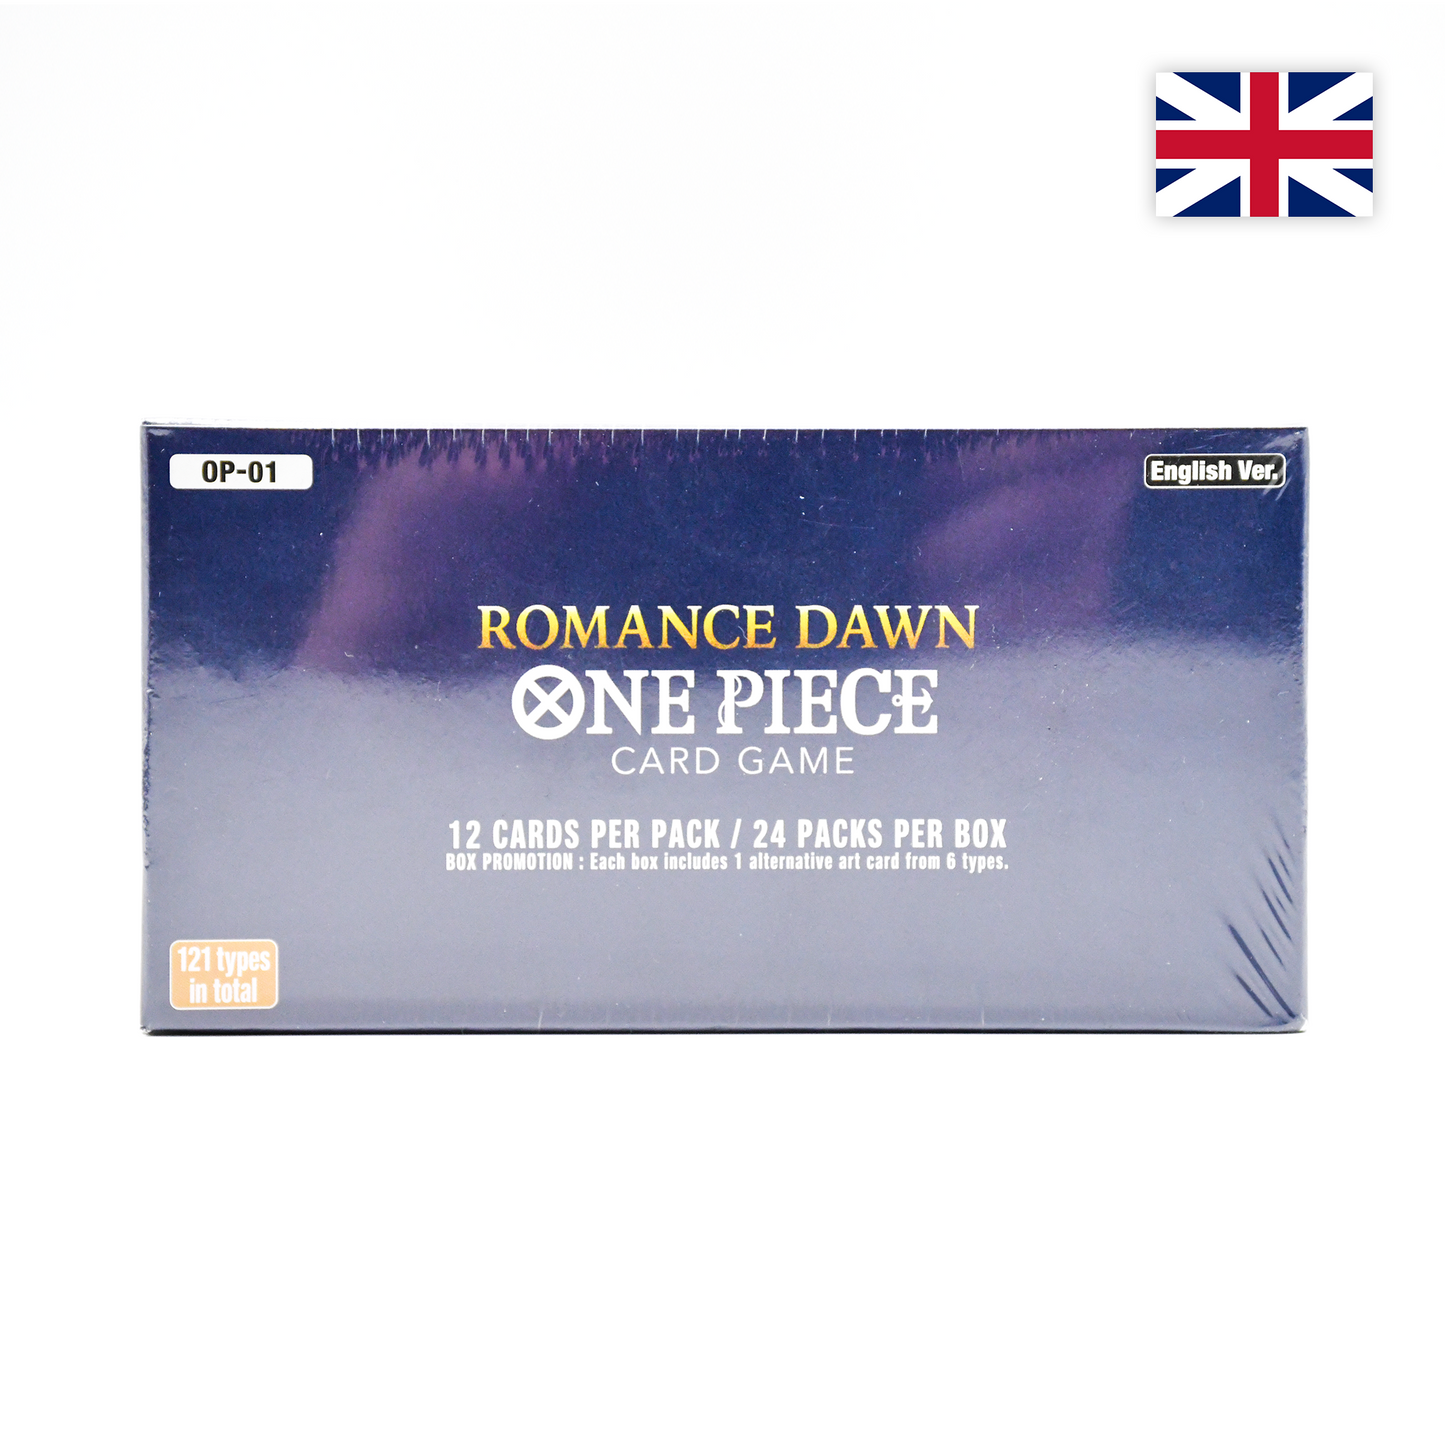 One Piece Card Game - Romance Dawn 1. Print (Blue Bottom) - Display OP-01 (Englisch)